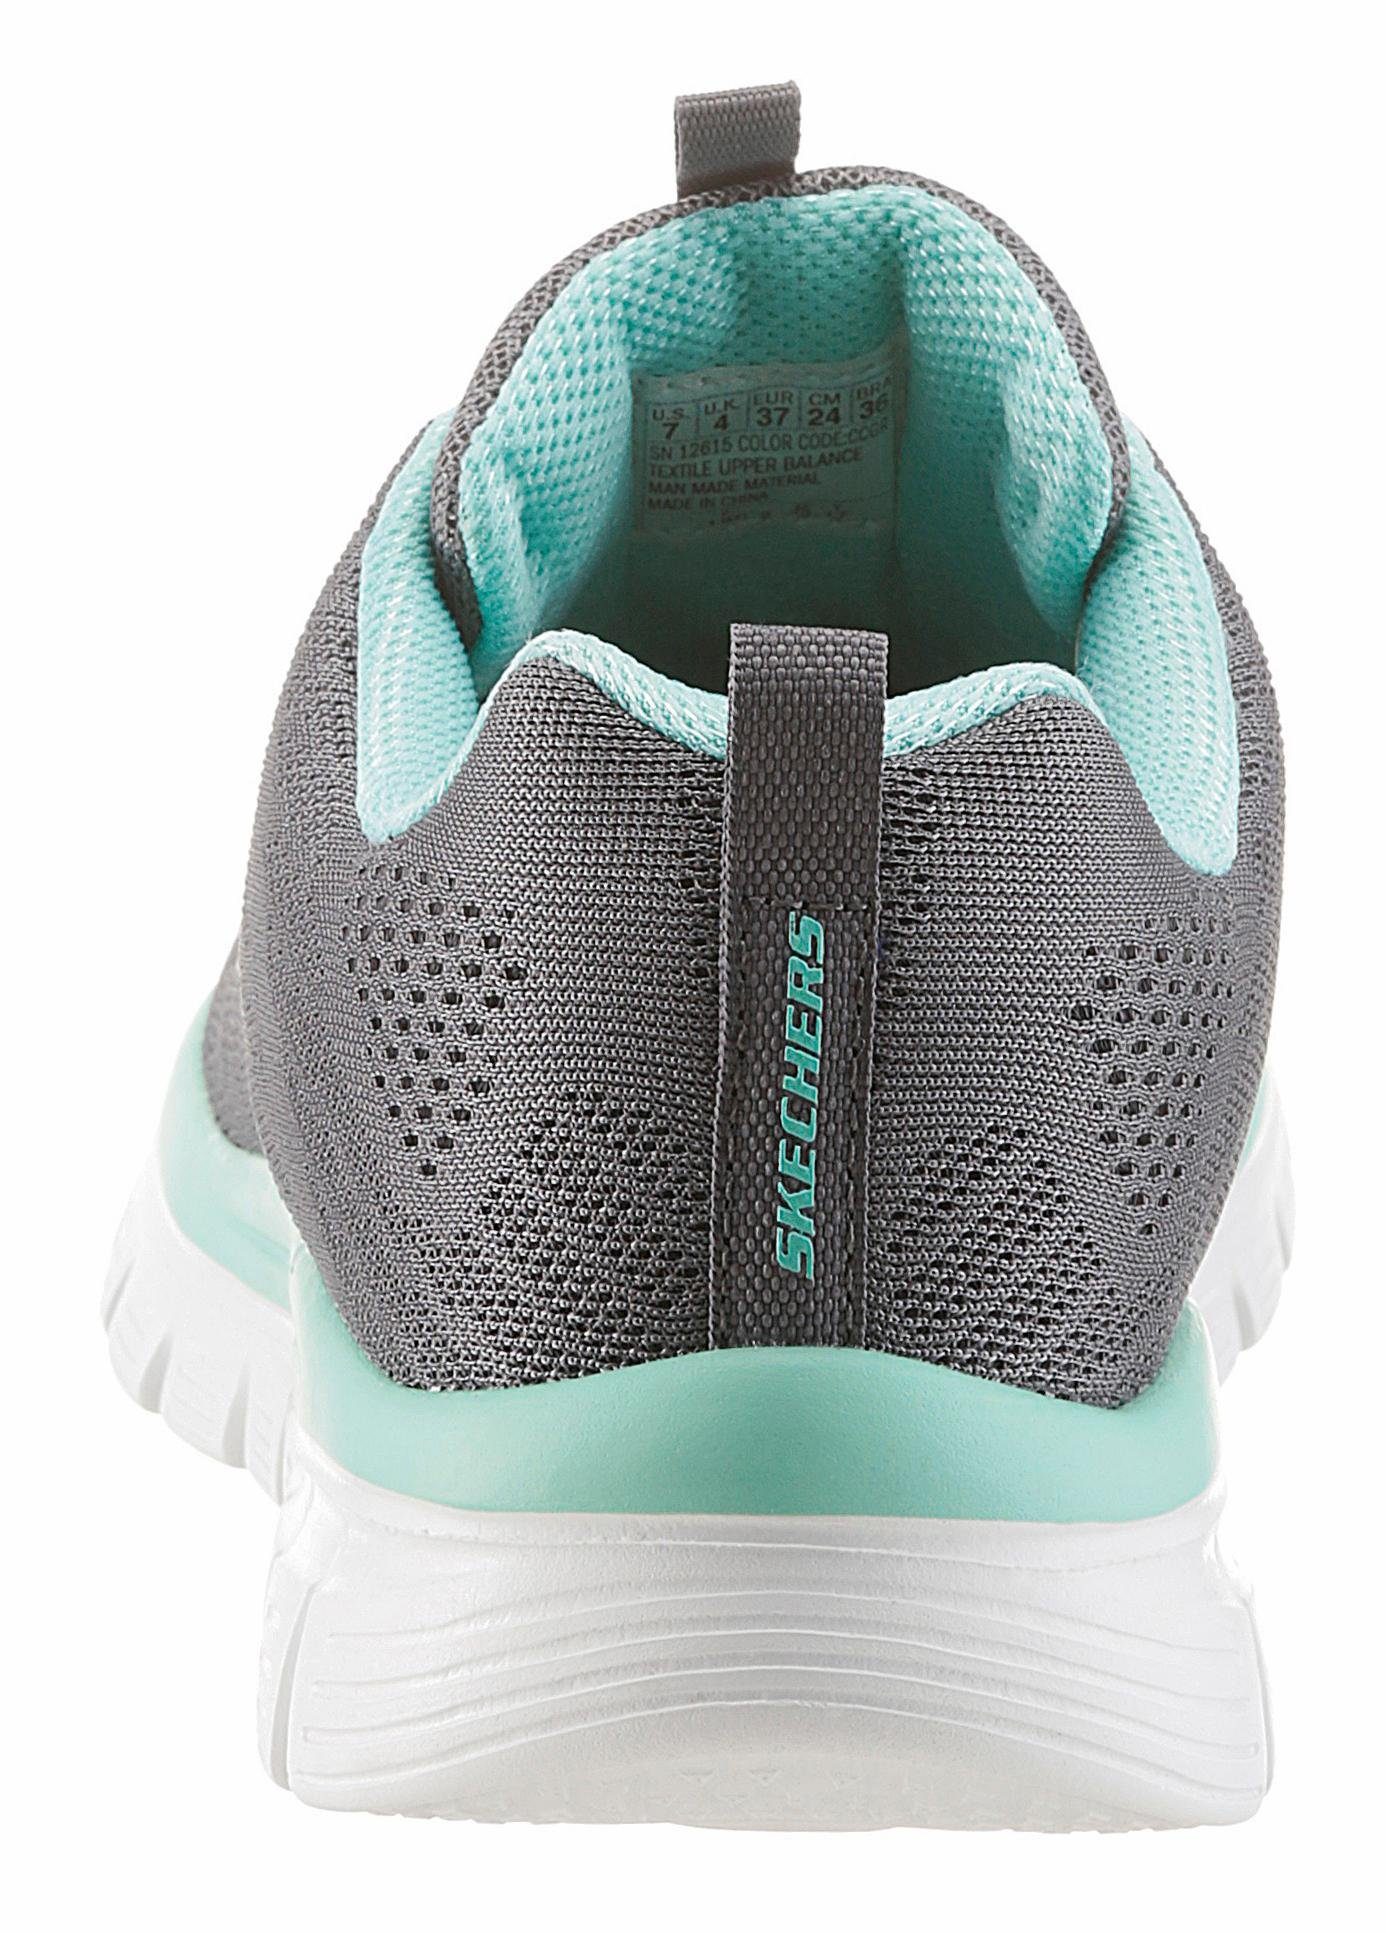 Connected Sneaker Get Skechers mit Graceful - Dämpfung grau-mint Memory Foam durch